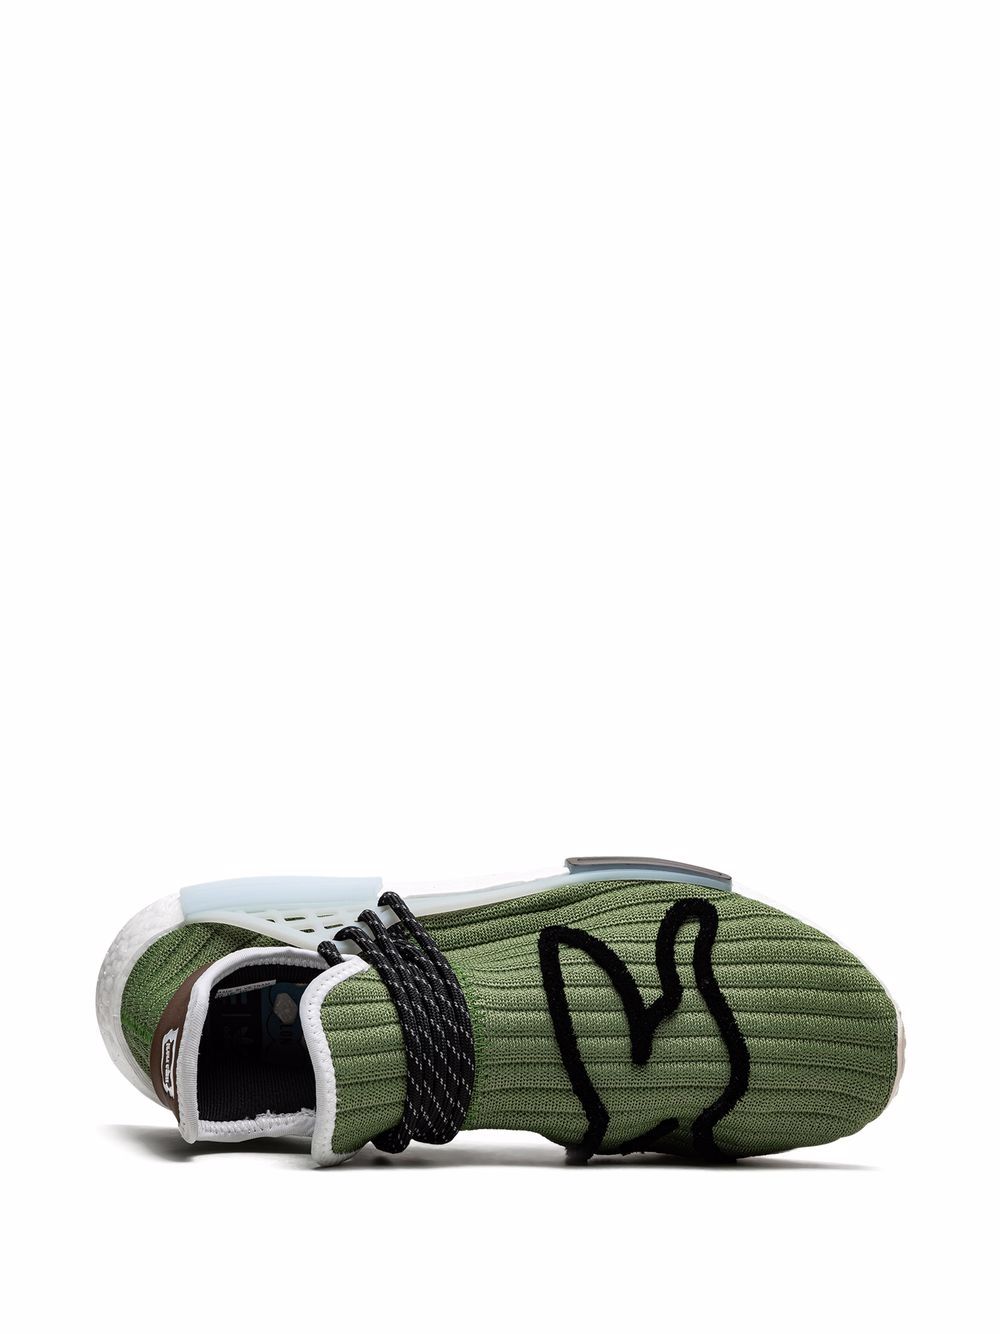 Adidas NMD Hu Pharrell x BBC Ice Cream Men's Shoes Green/White